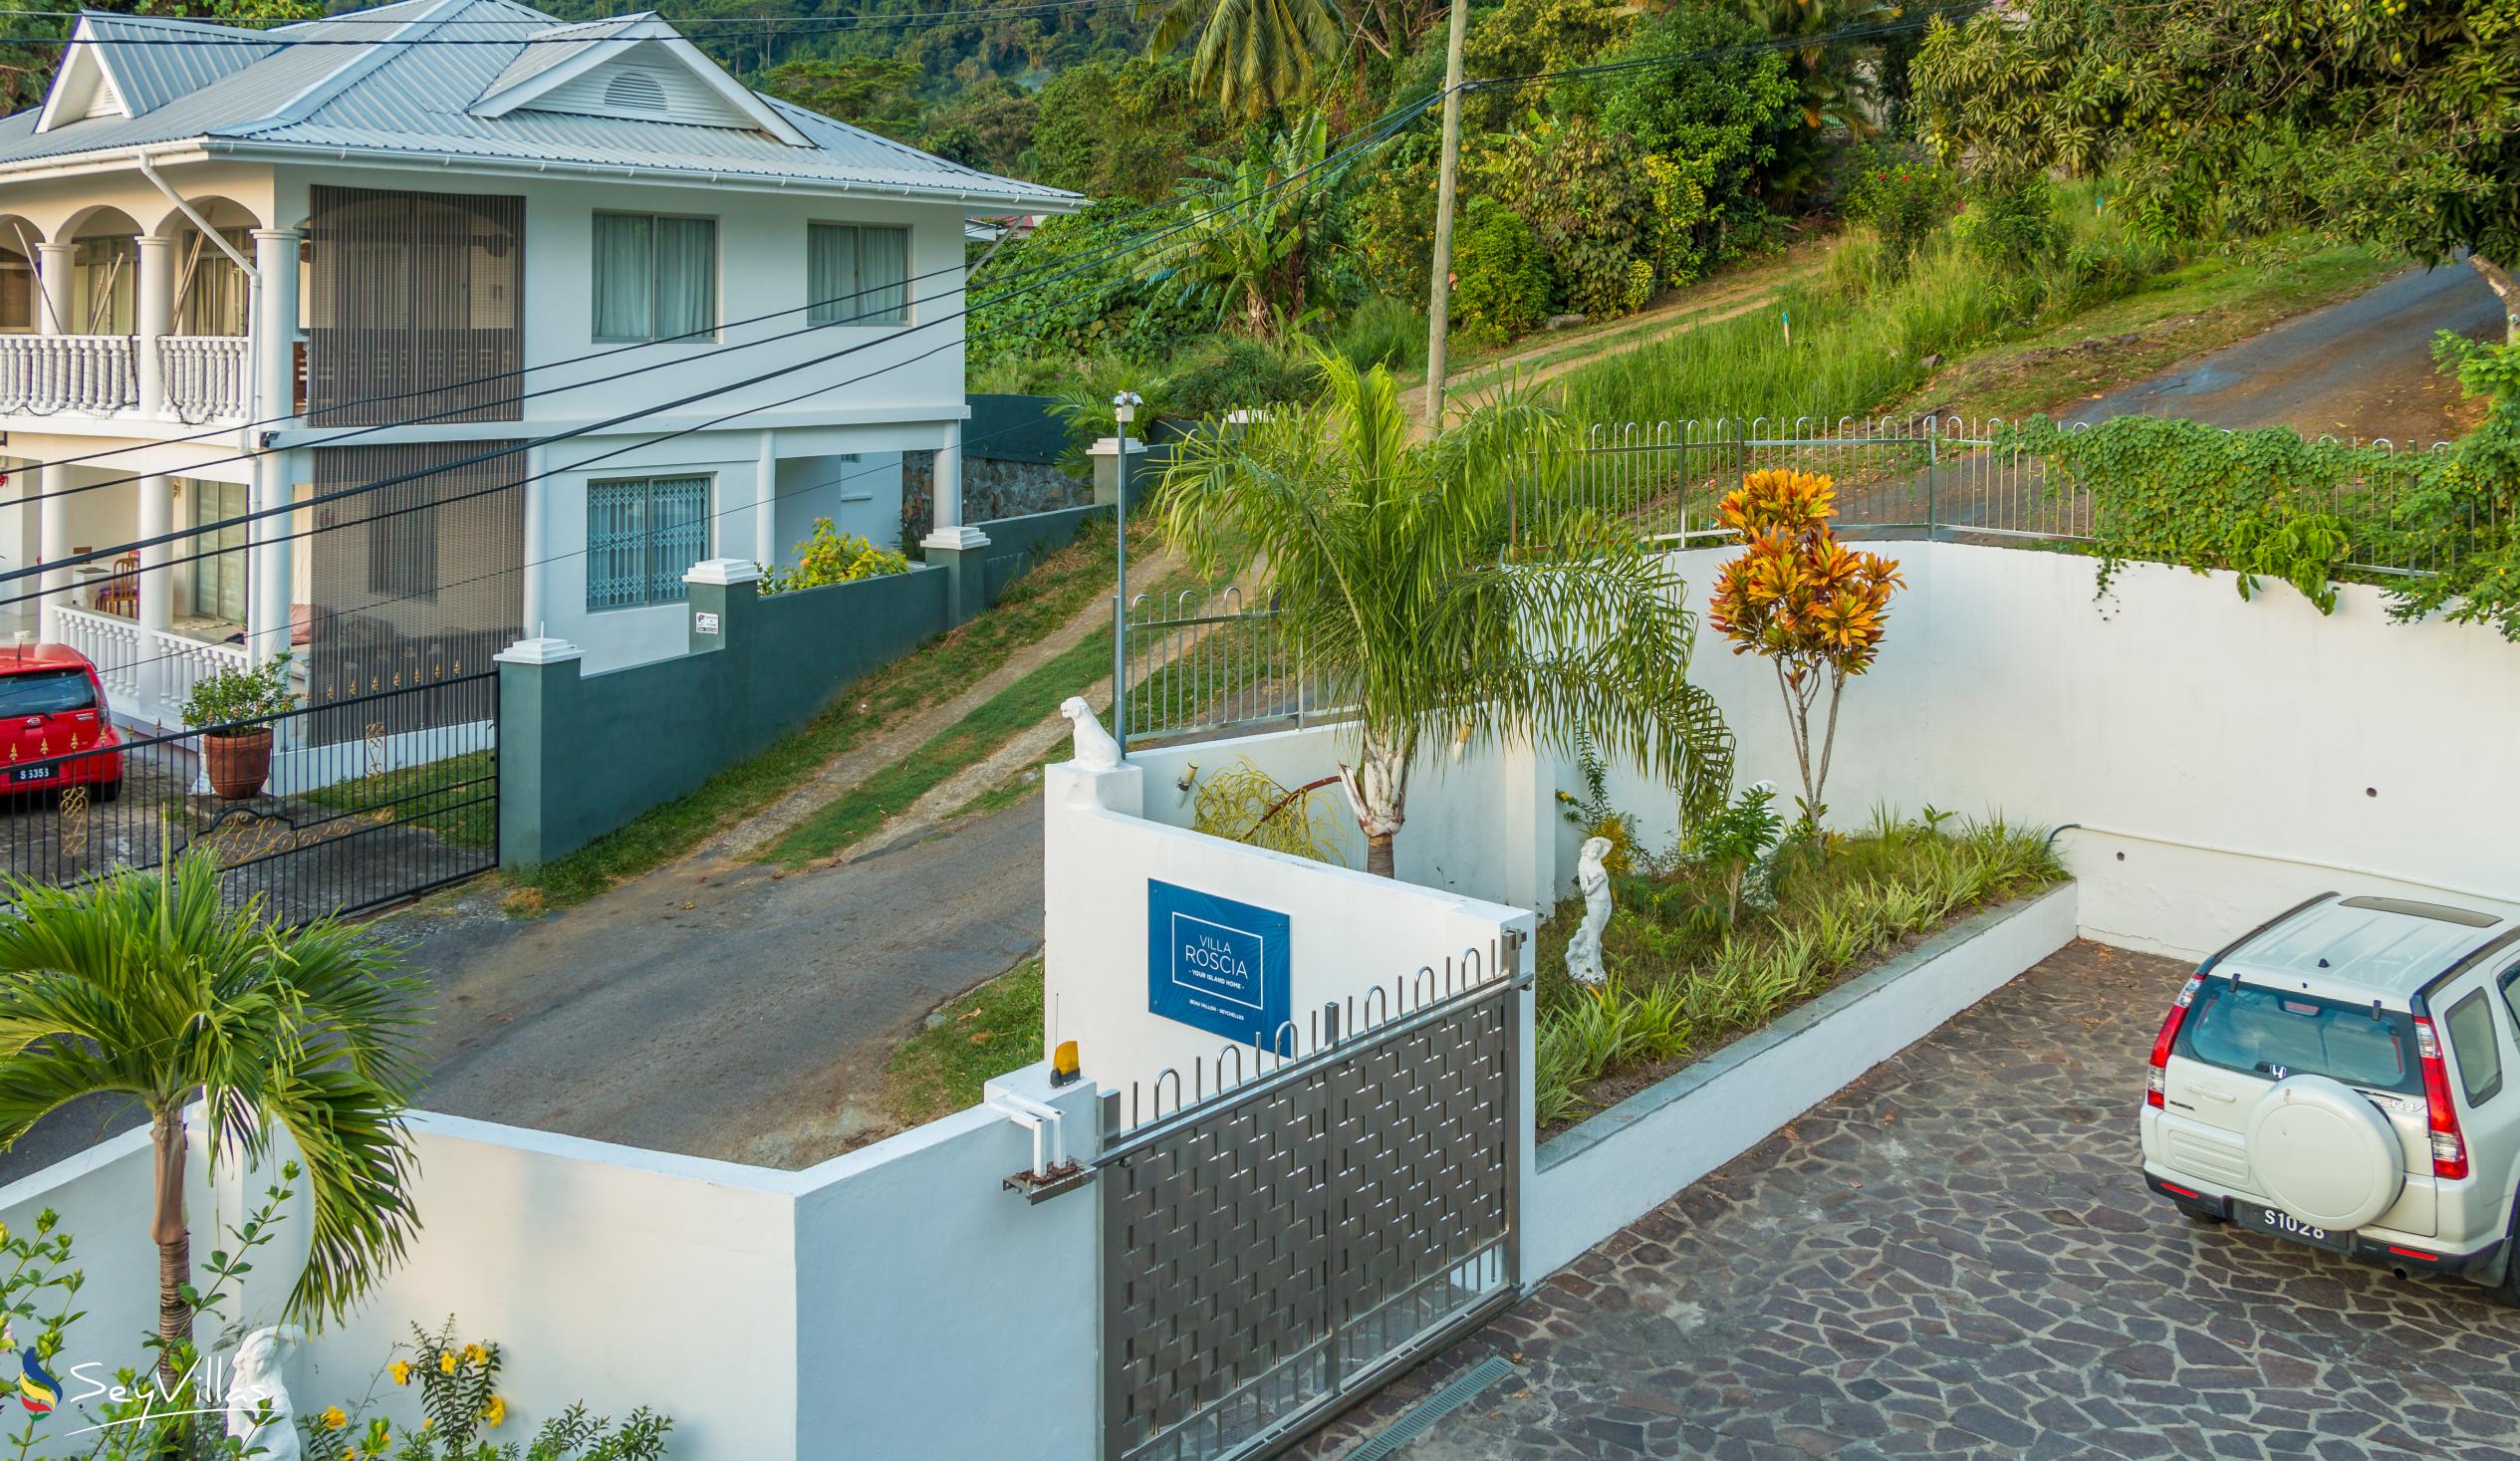 Photo 3: Villa Roscia - Outdoor area - Mahé (Seychelles)